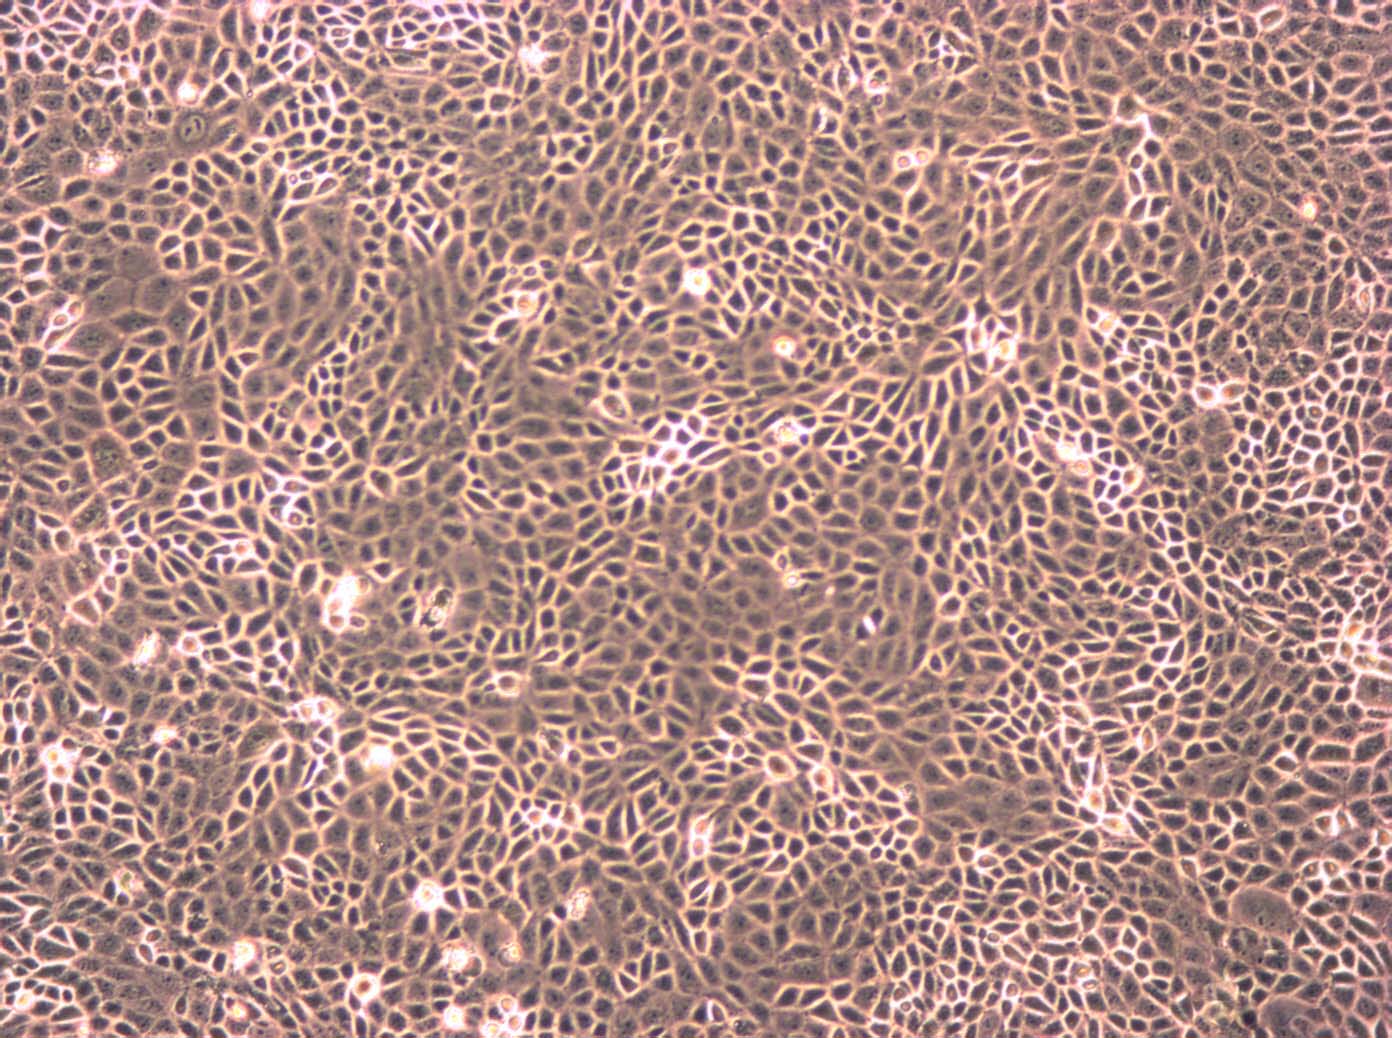 3LL epithelioid cells小鼠肺癌细胞系,3LL epithelioid cells